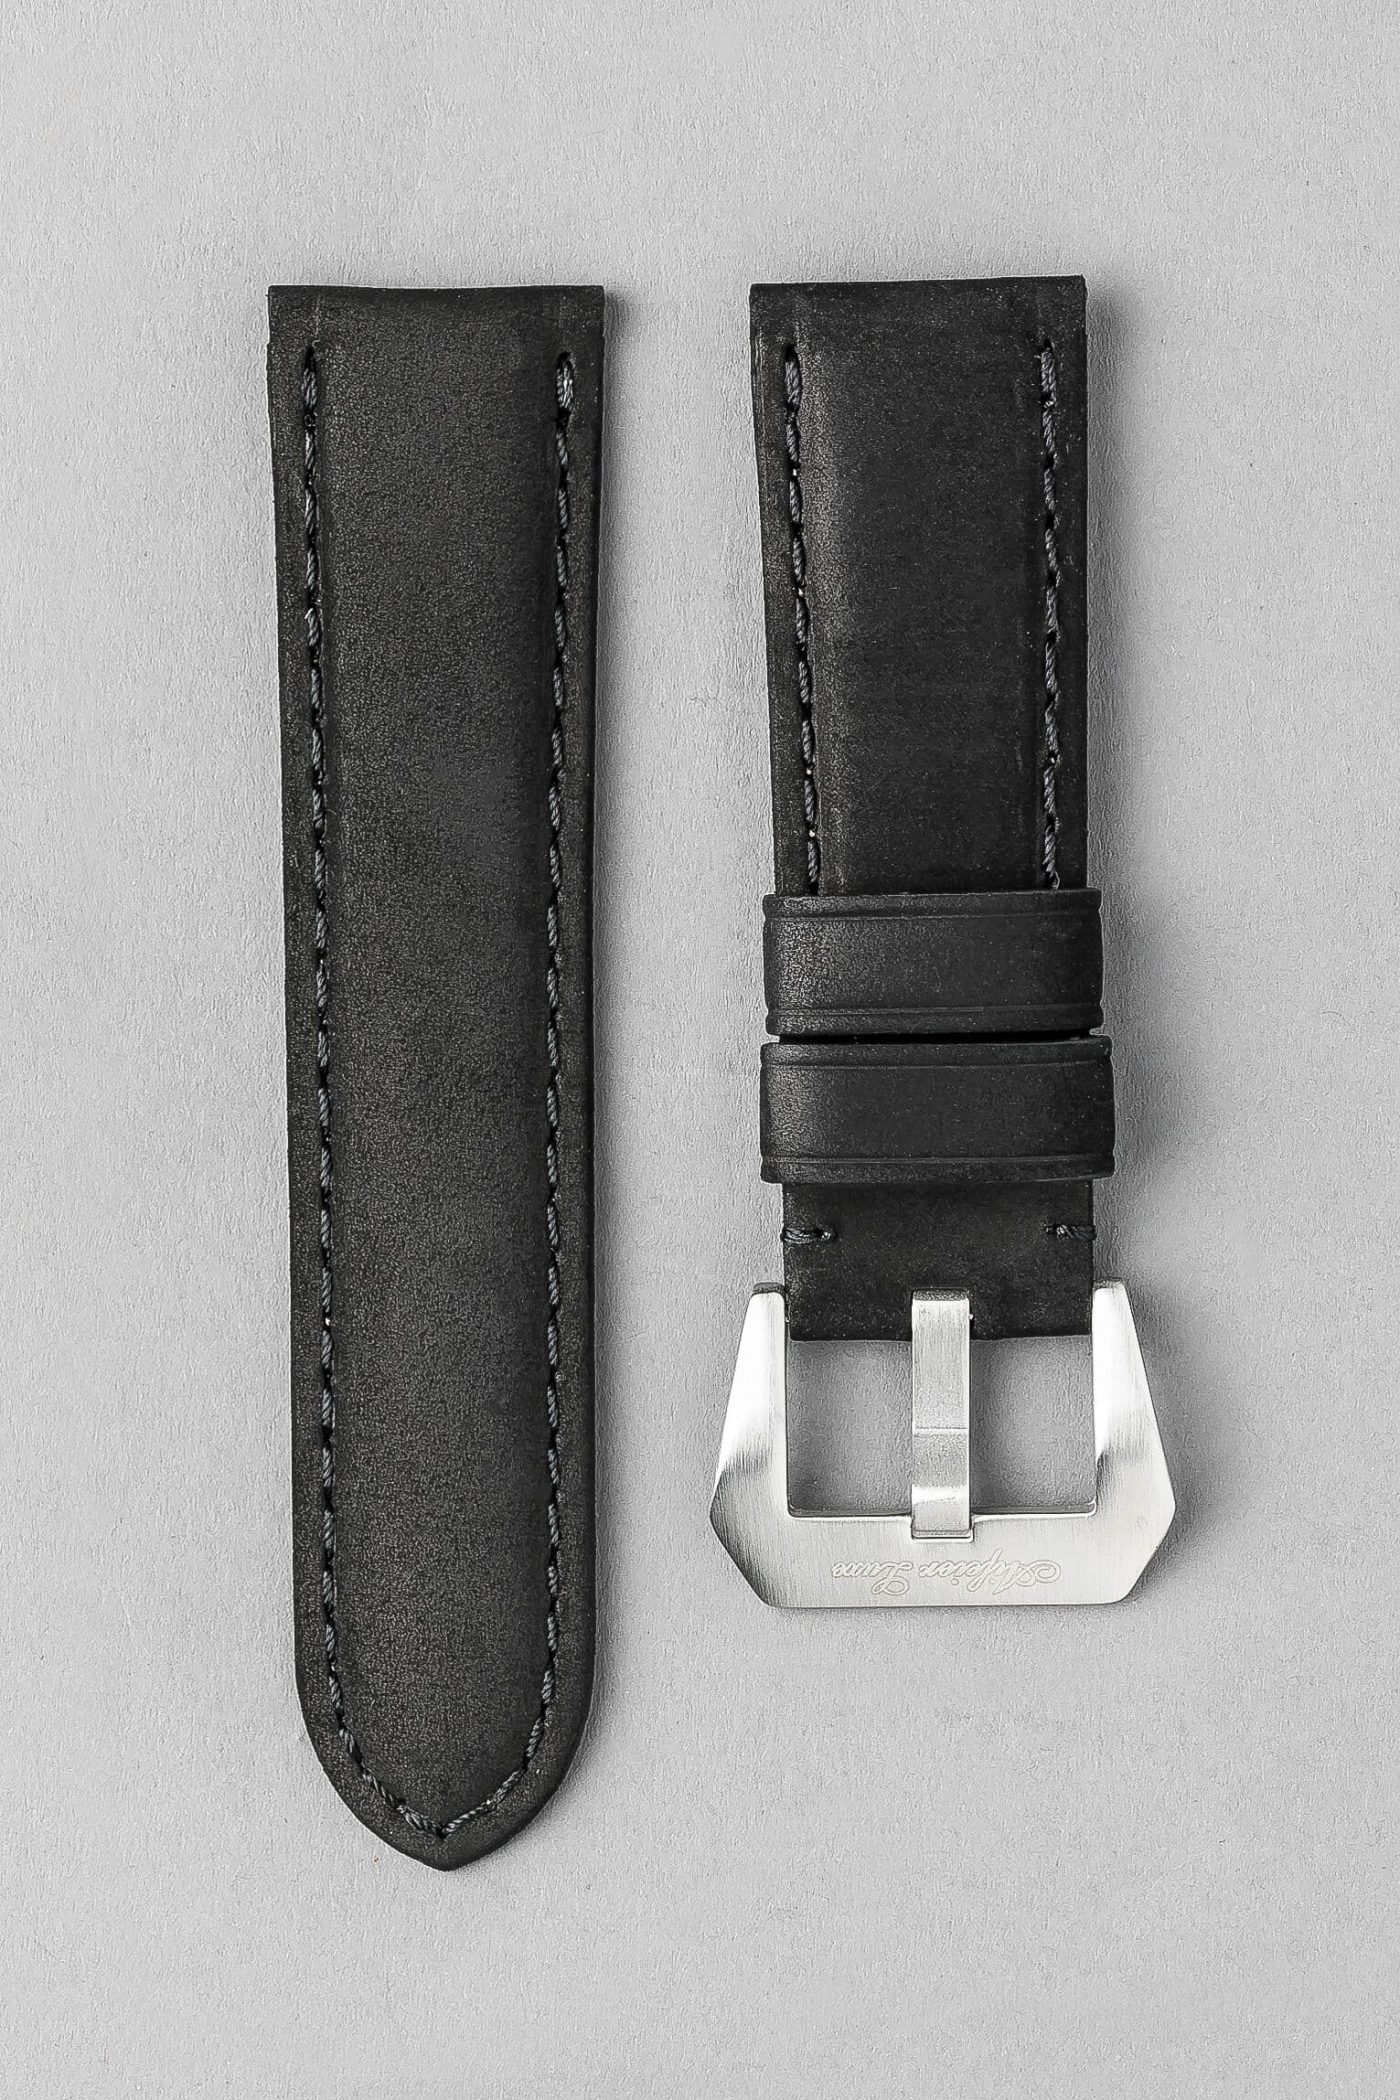 OPKF 麂皮風格立體帶身牛皮錶帶 - 黑色（適用 Panerai 沛納海錶款）